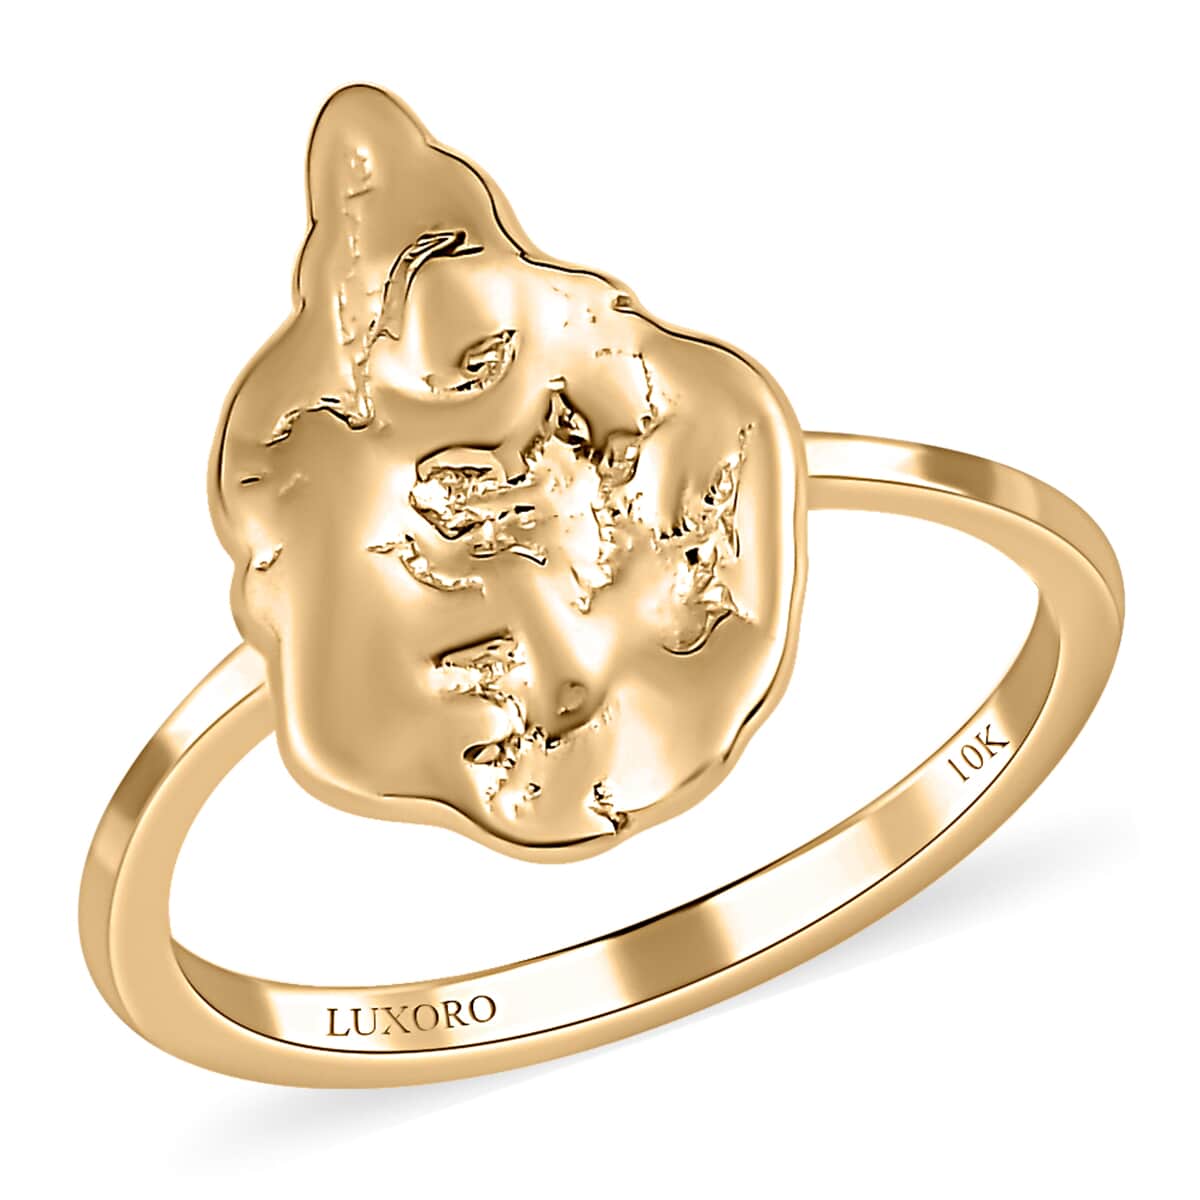 Luxoro 10K Yellow Gold Ring 2.35 Grams image number 0